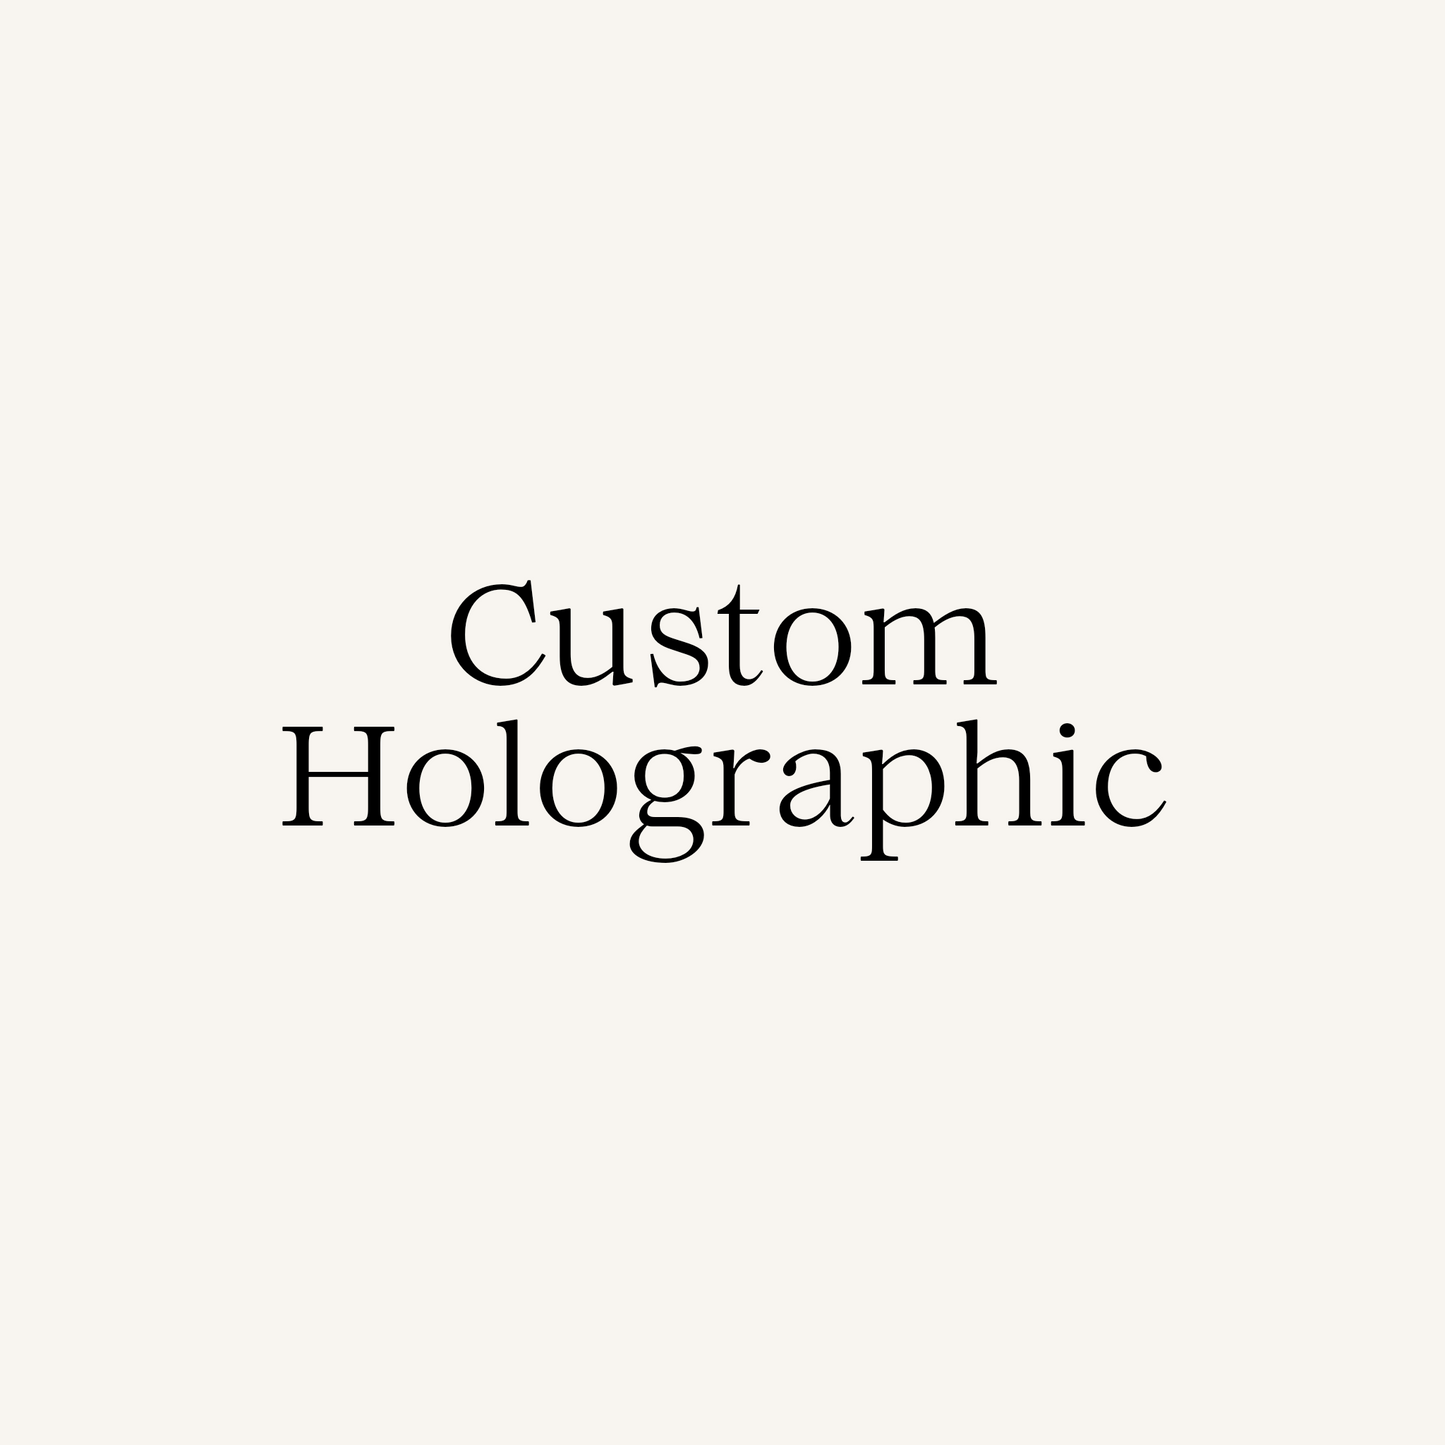 Custom Holographic